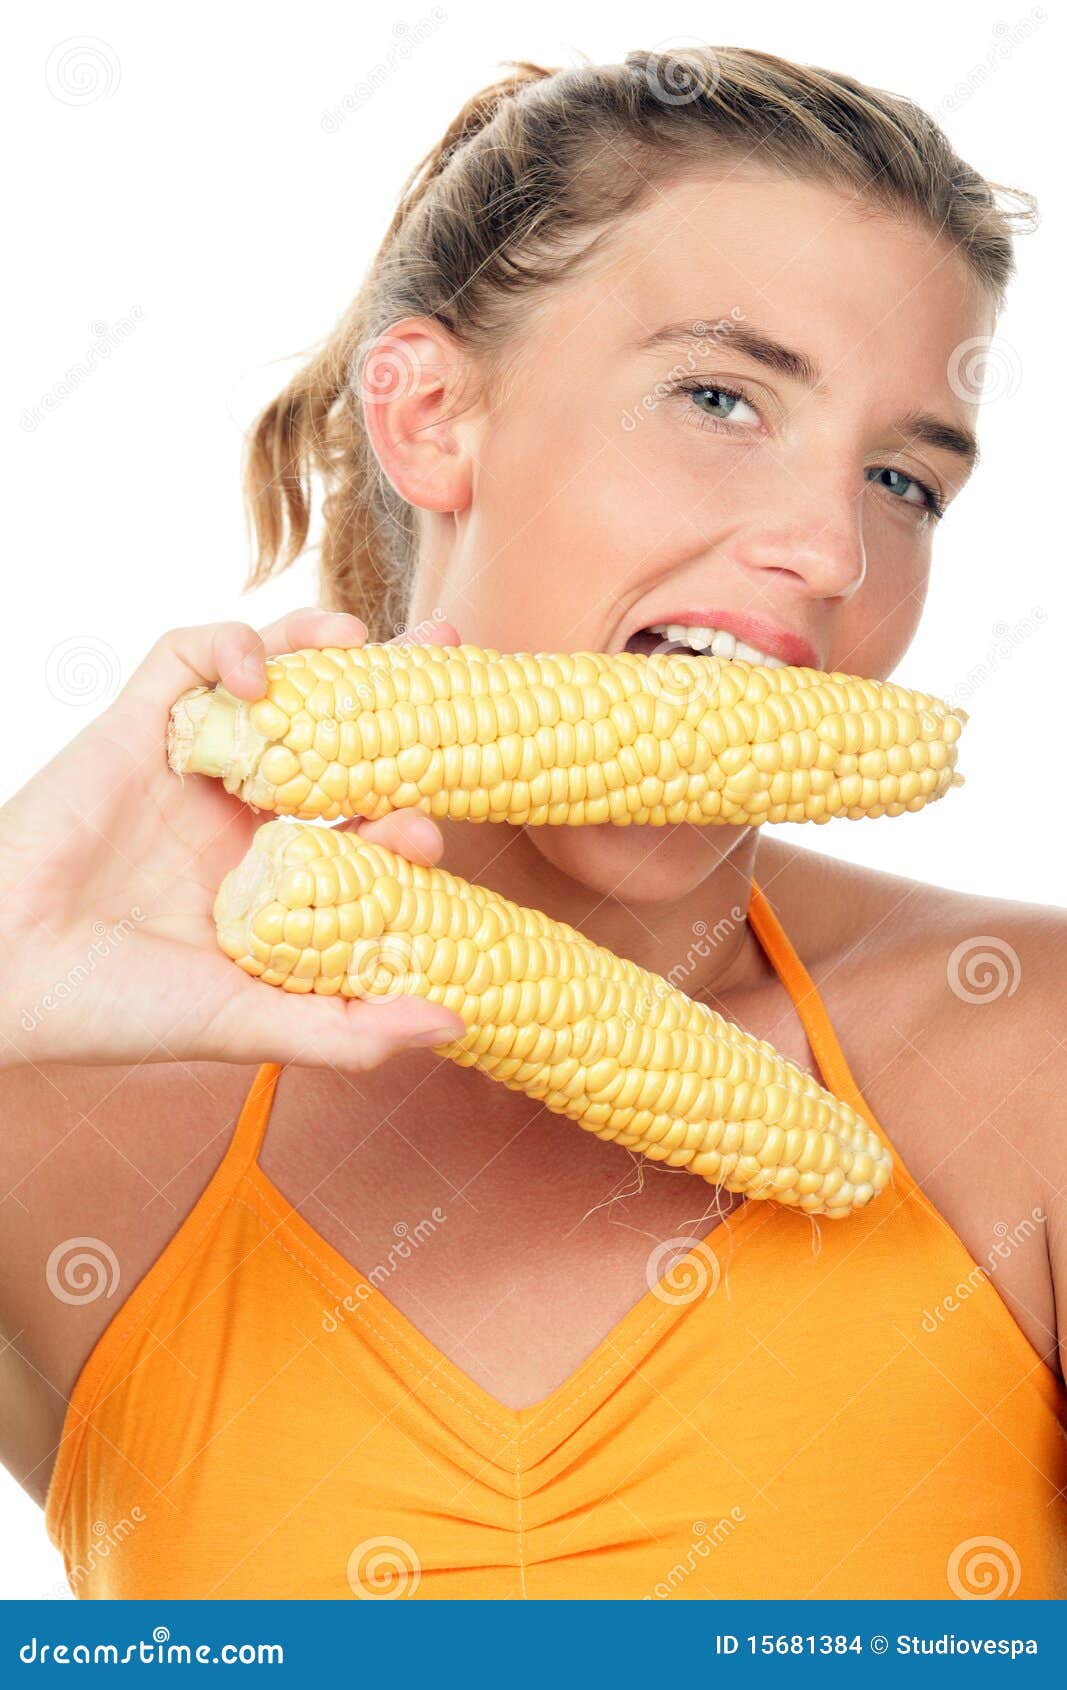 https://thumbs.dreamstime.com/z/woman-corn-cobs-15681384.jpg